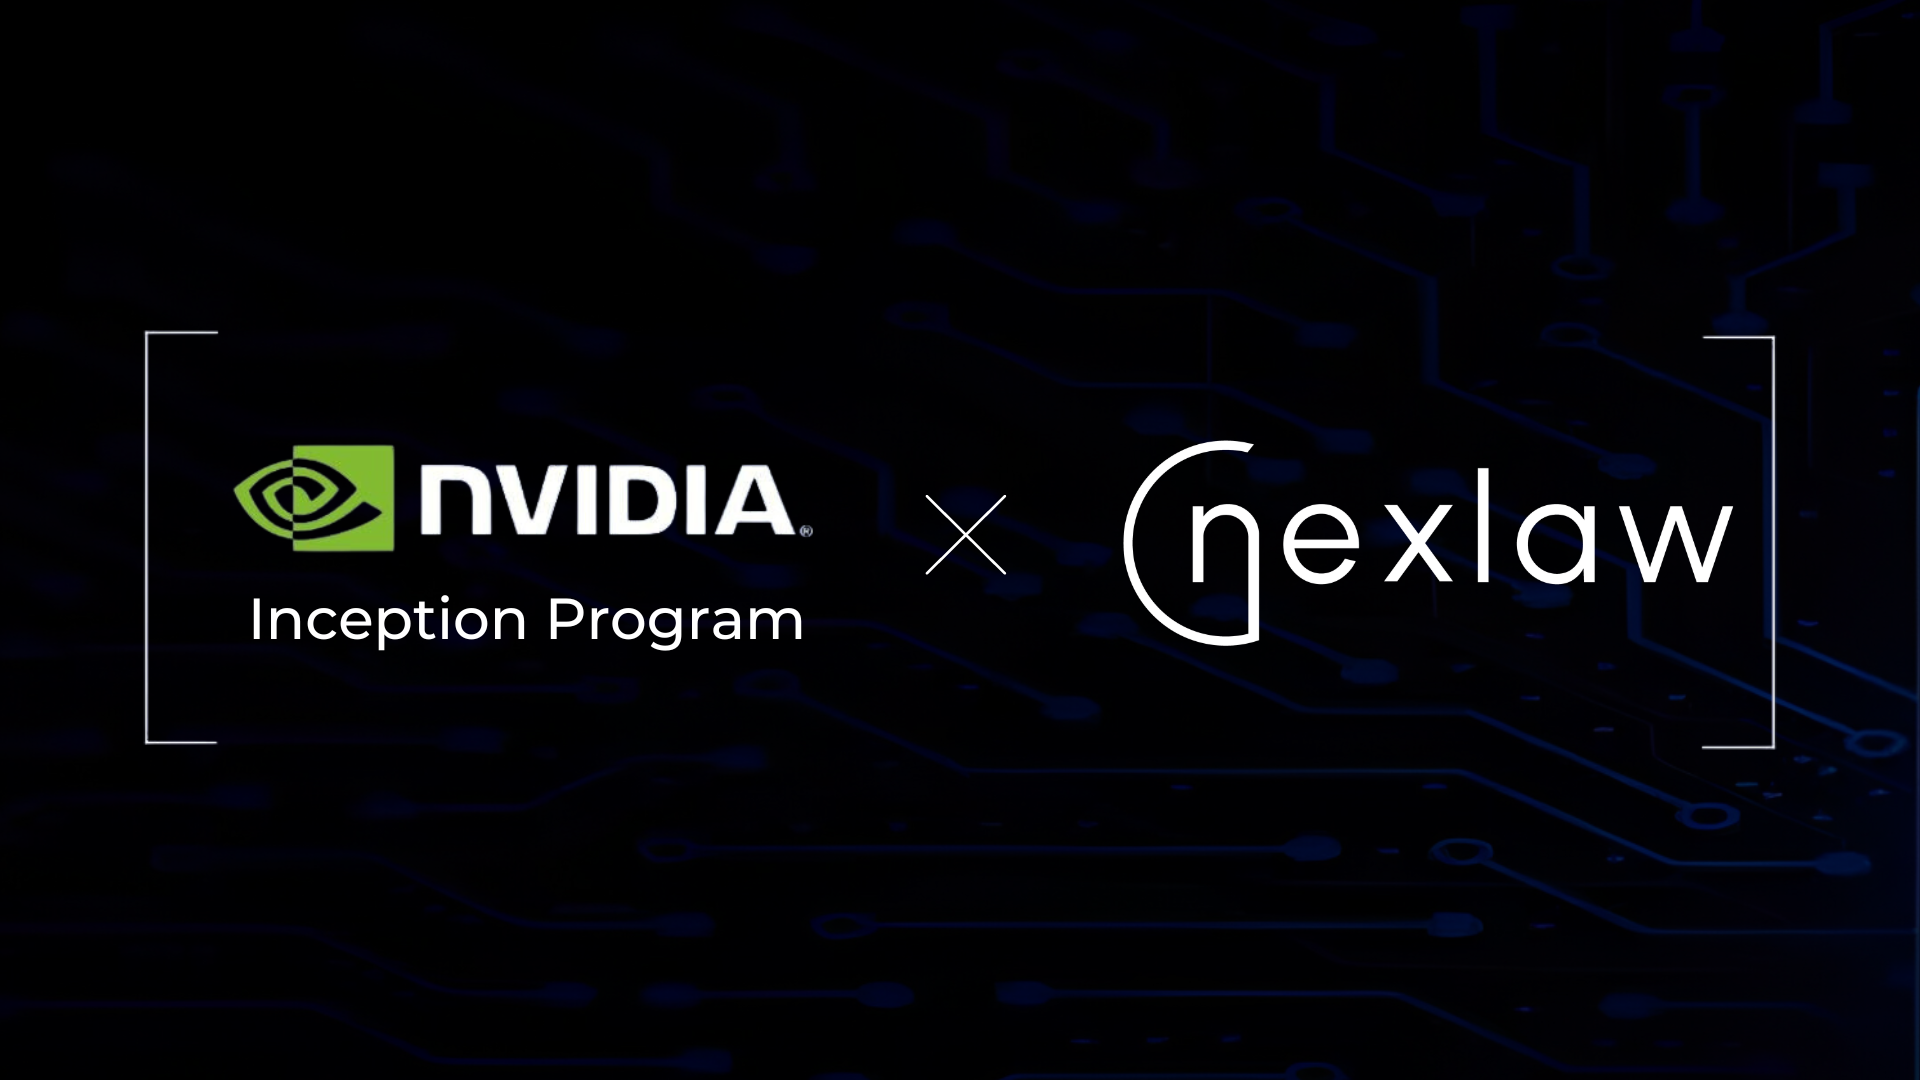 NEXLAW AI 自豪地宣布它最近被 NVIDIA Inception 计划接受